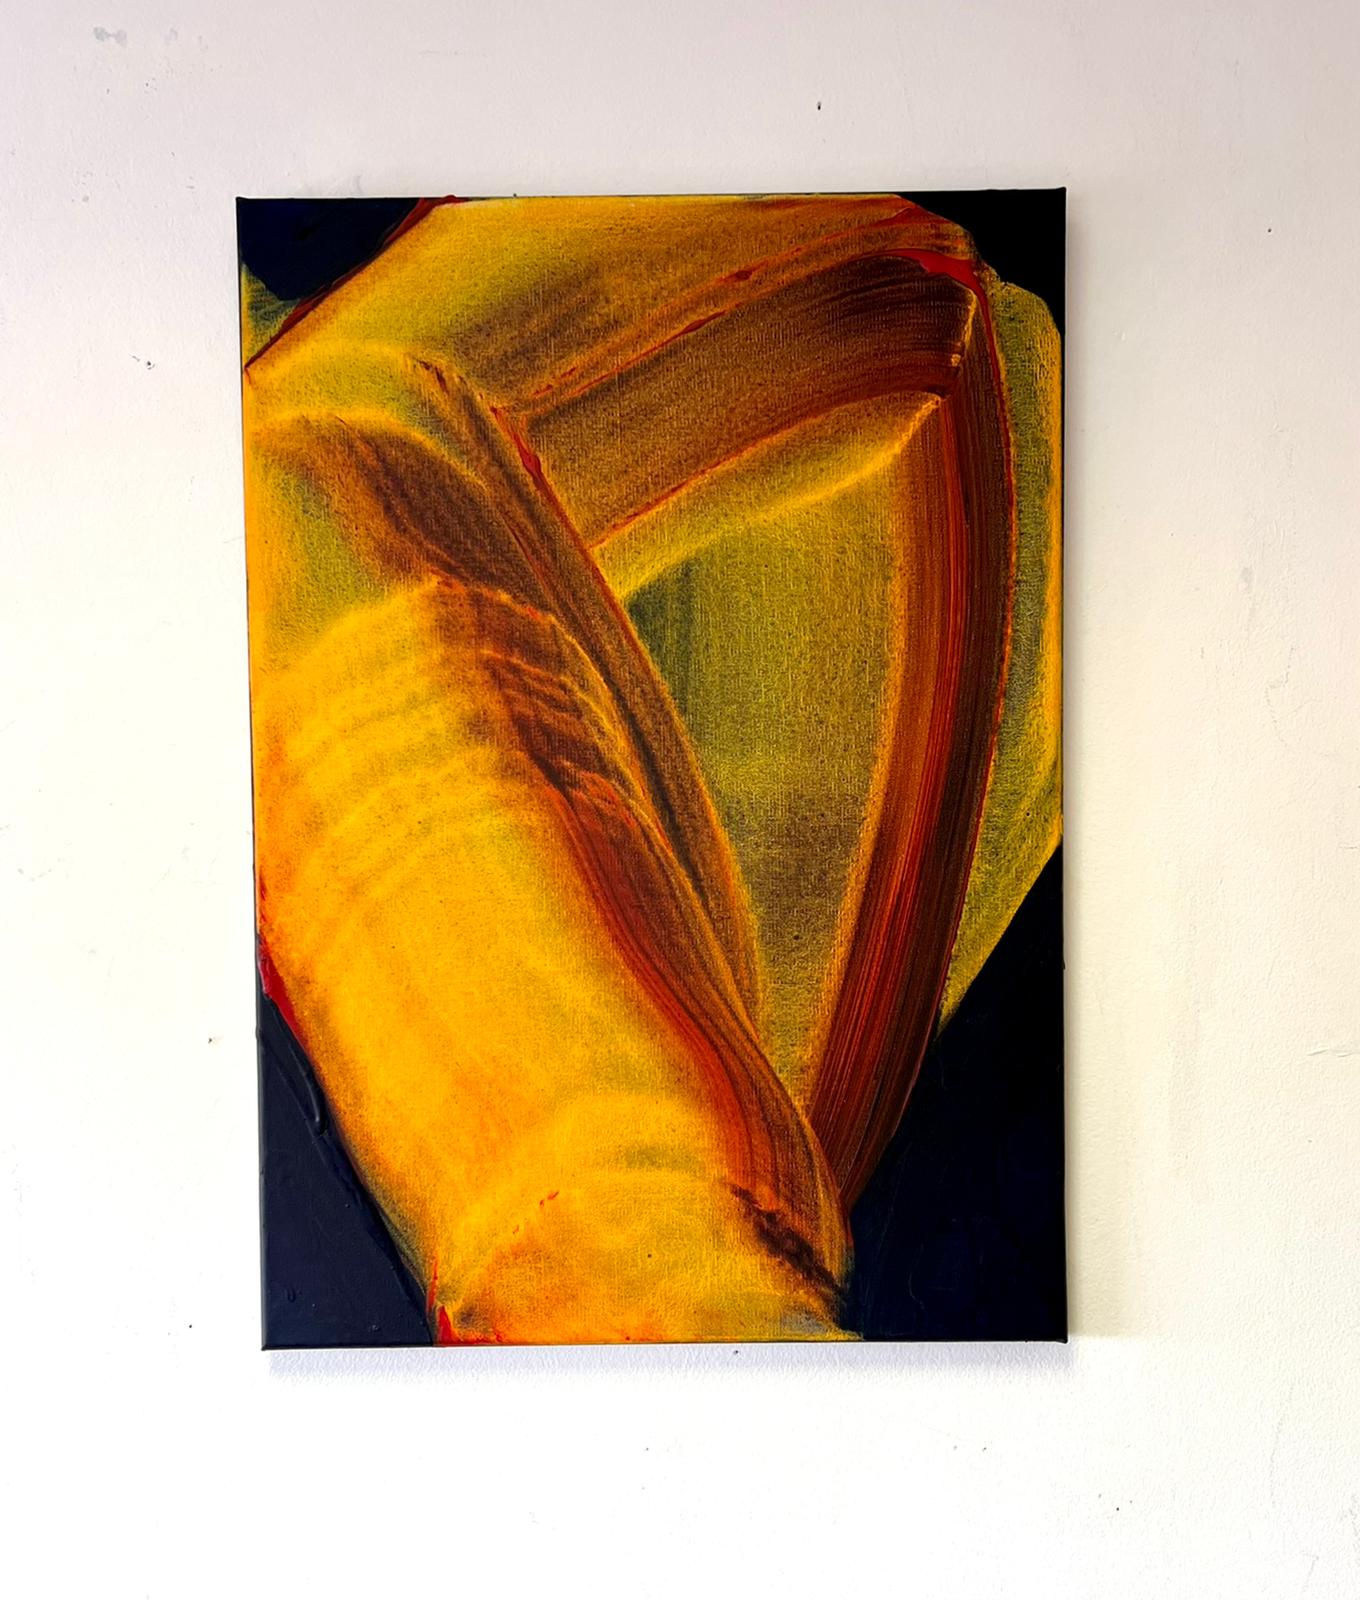 Stanislav Ondruš “Through” 2022 60 cm x 45 cm acrylic on canvas